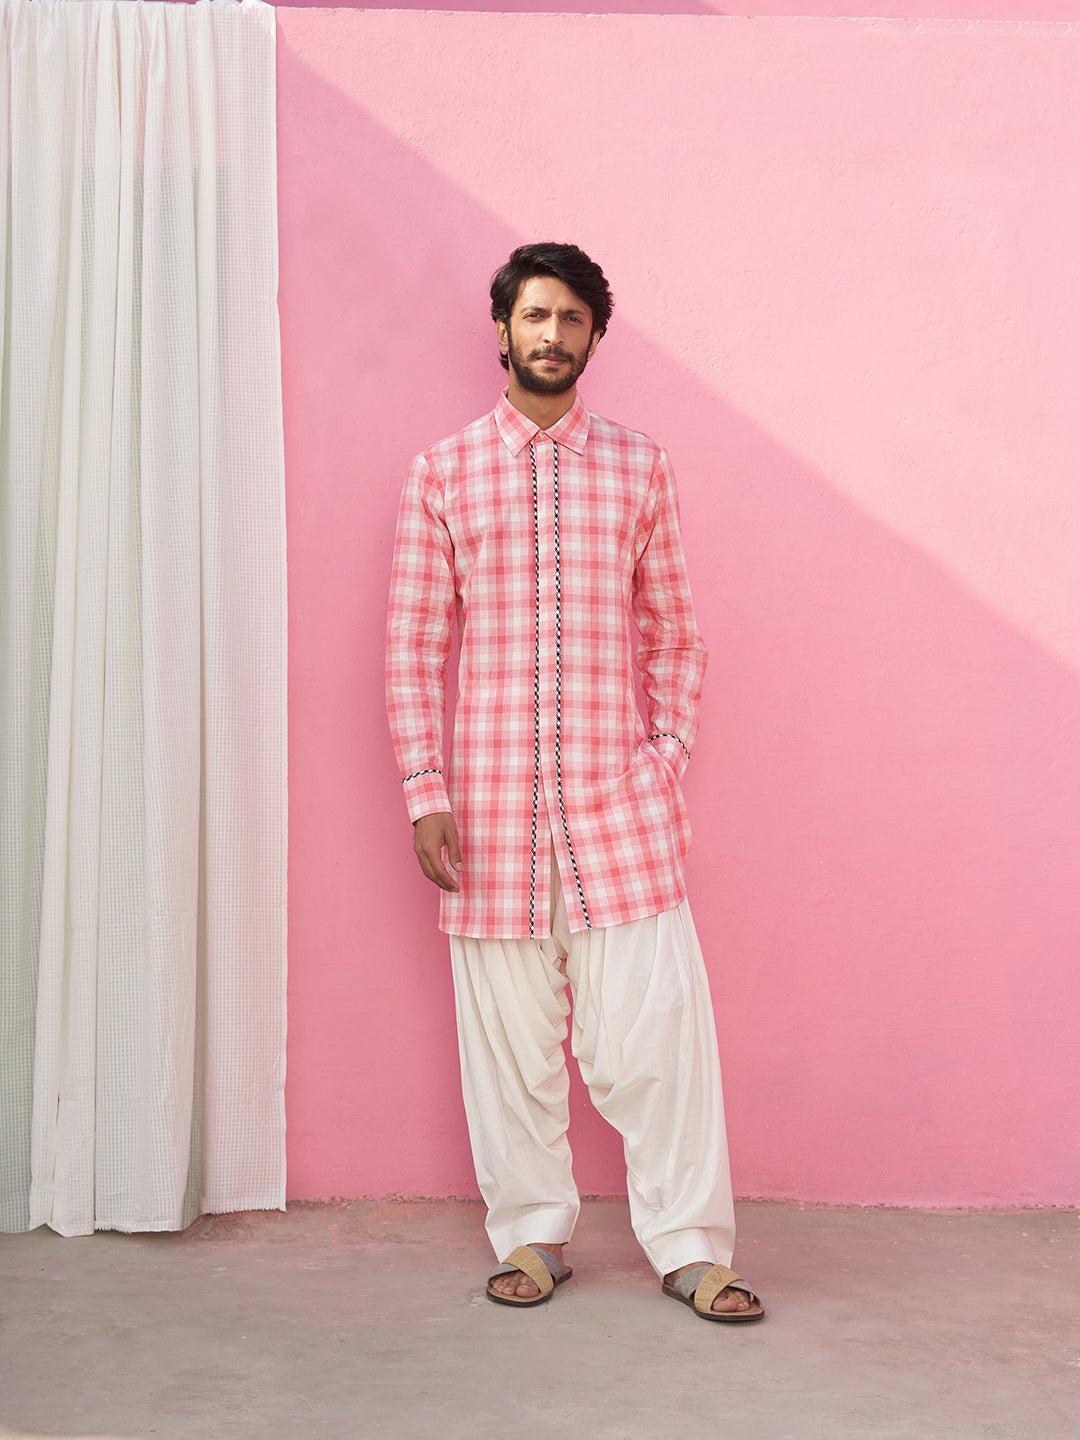 Classic Collar pink kurta with gingham checks piping